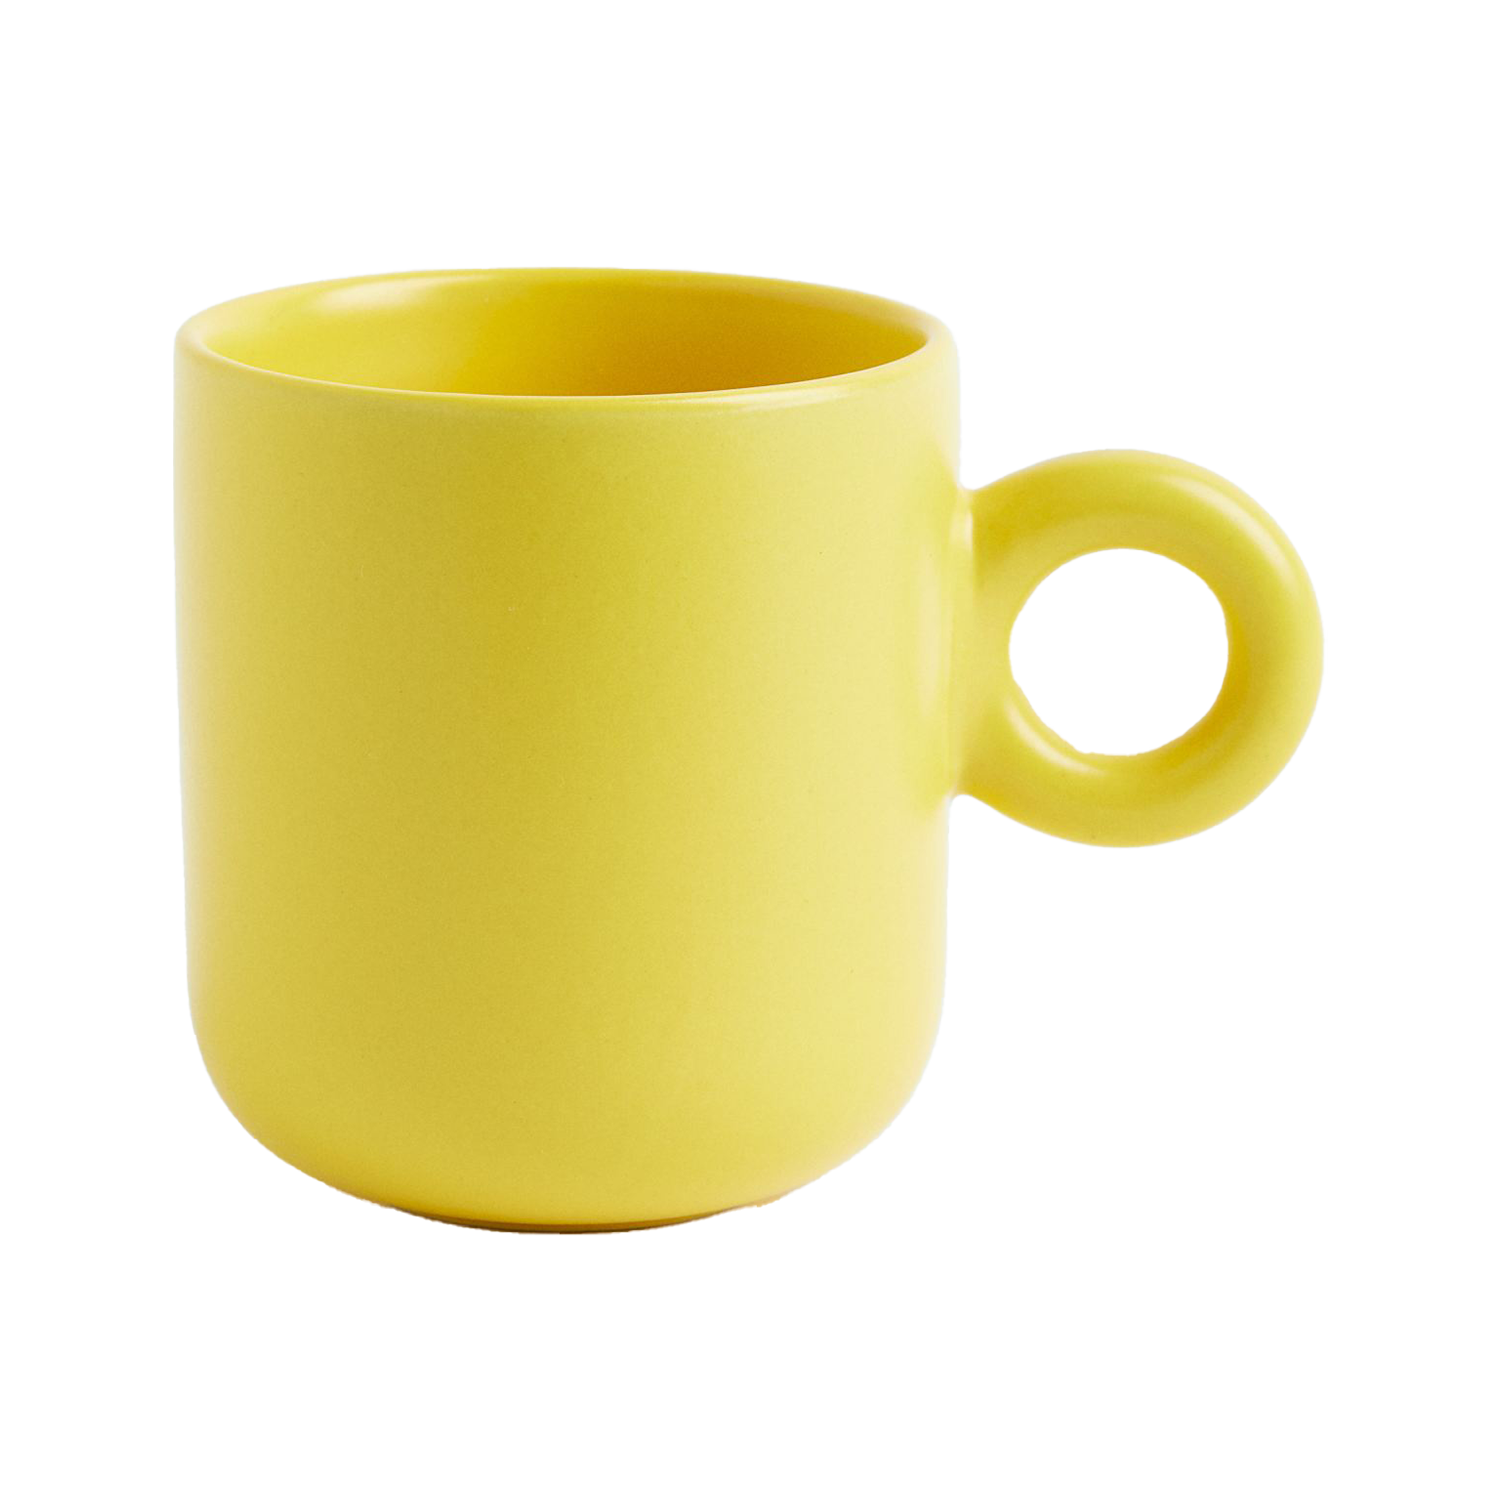 H&M Stoneware Mug in Yellow.